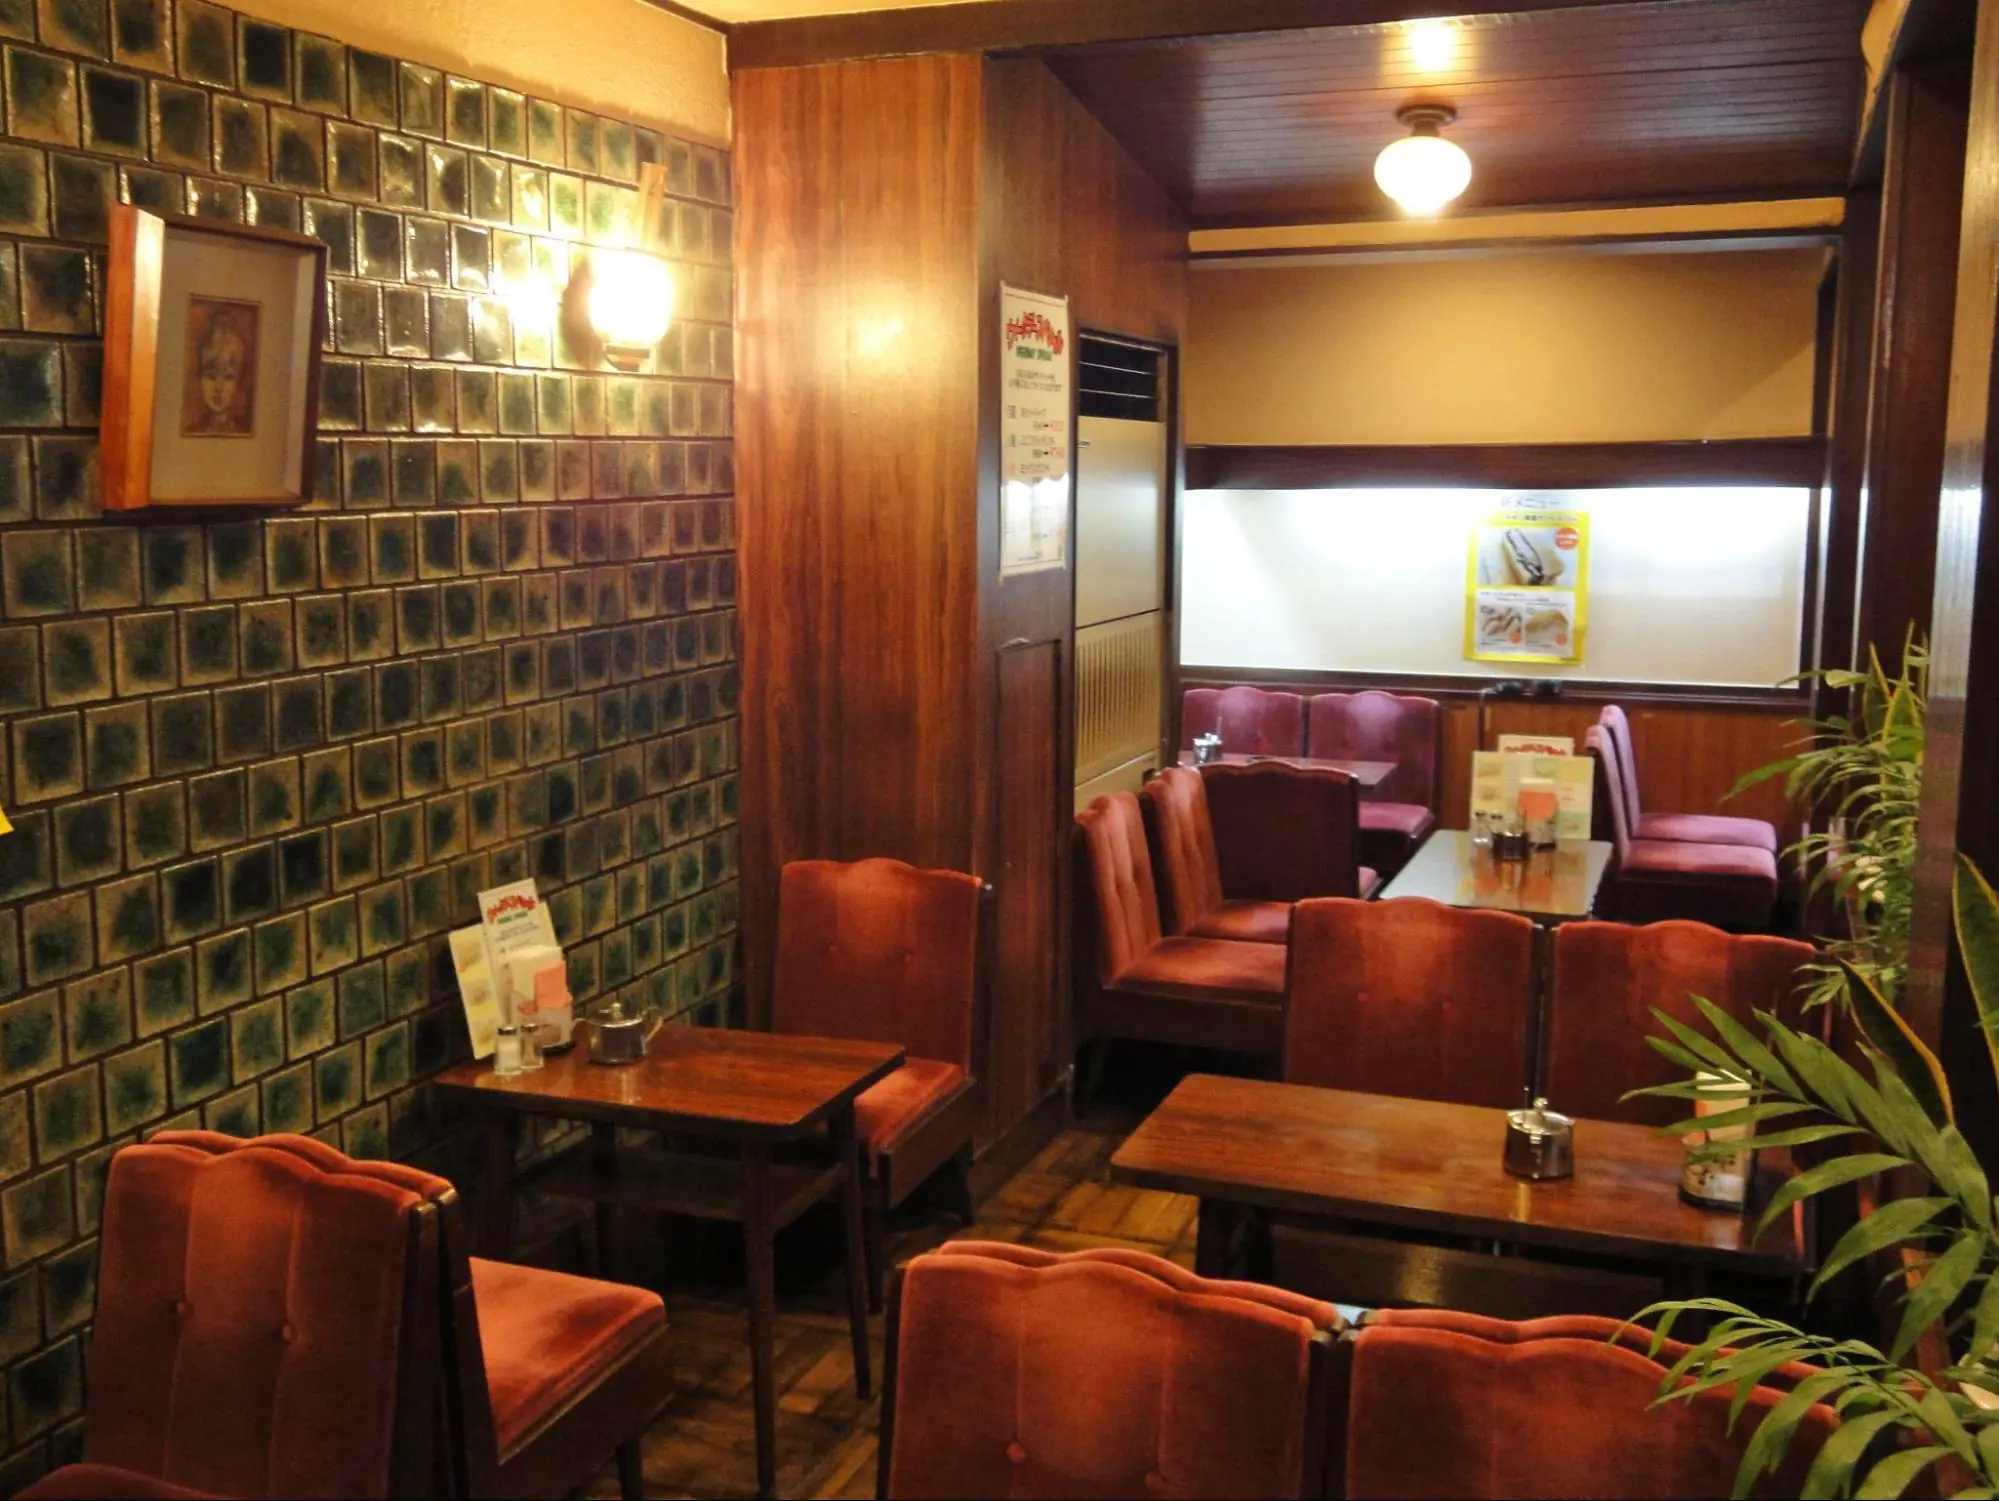 Konparu: A Long-established Coffee Shop in Nagoya with Showa Nostalgia